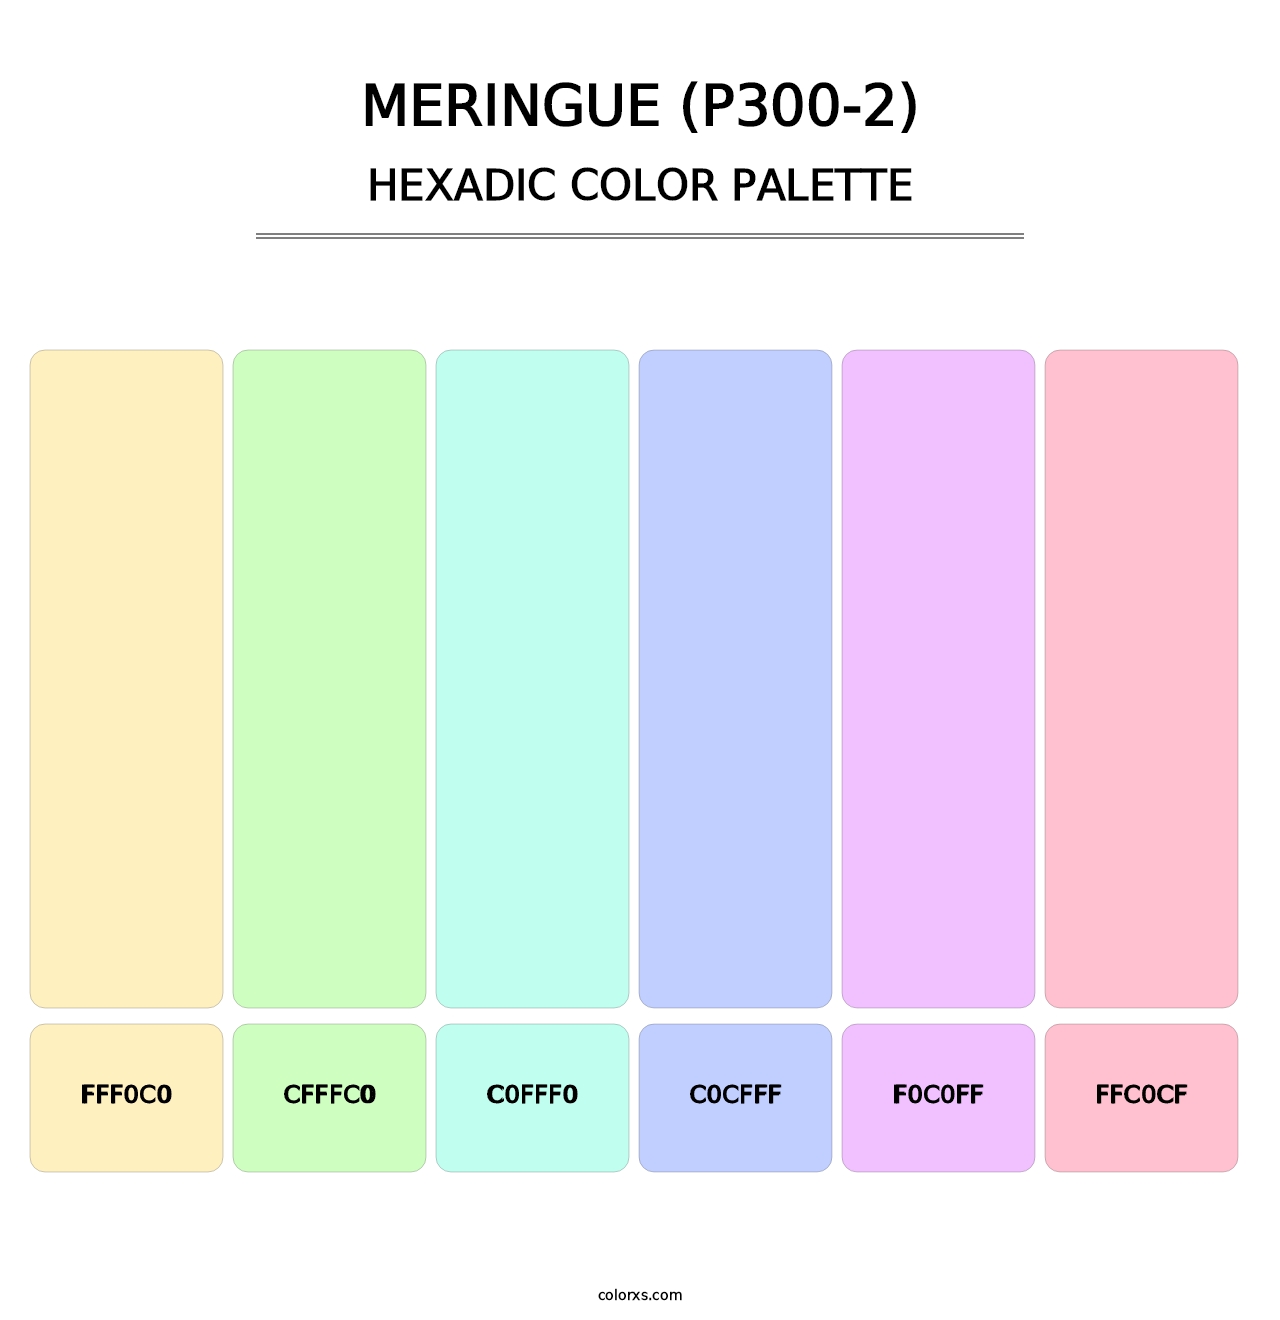 Meringue (P300-2) - Hexadic Color Palette